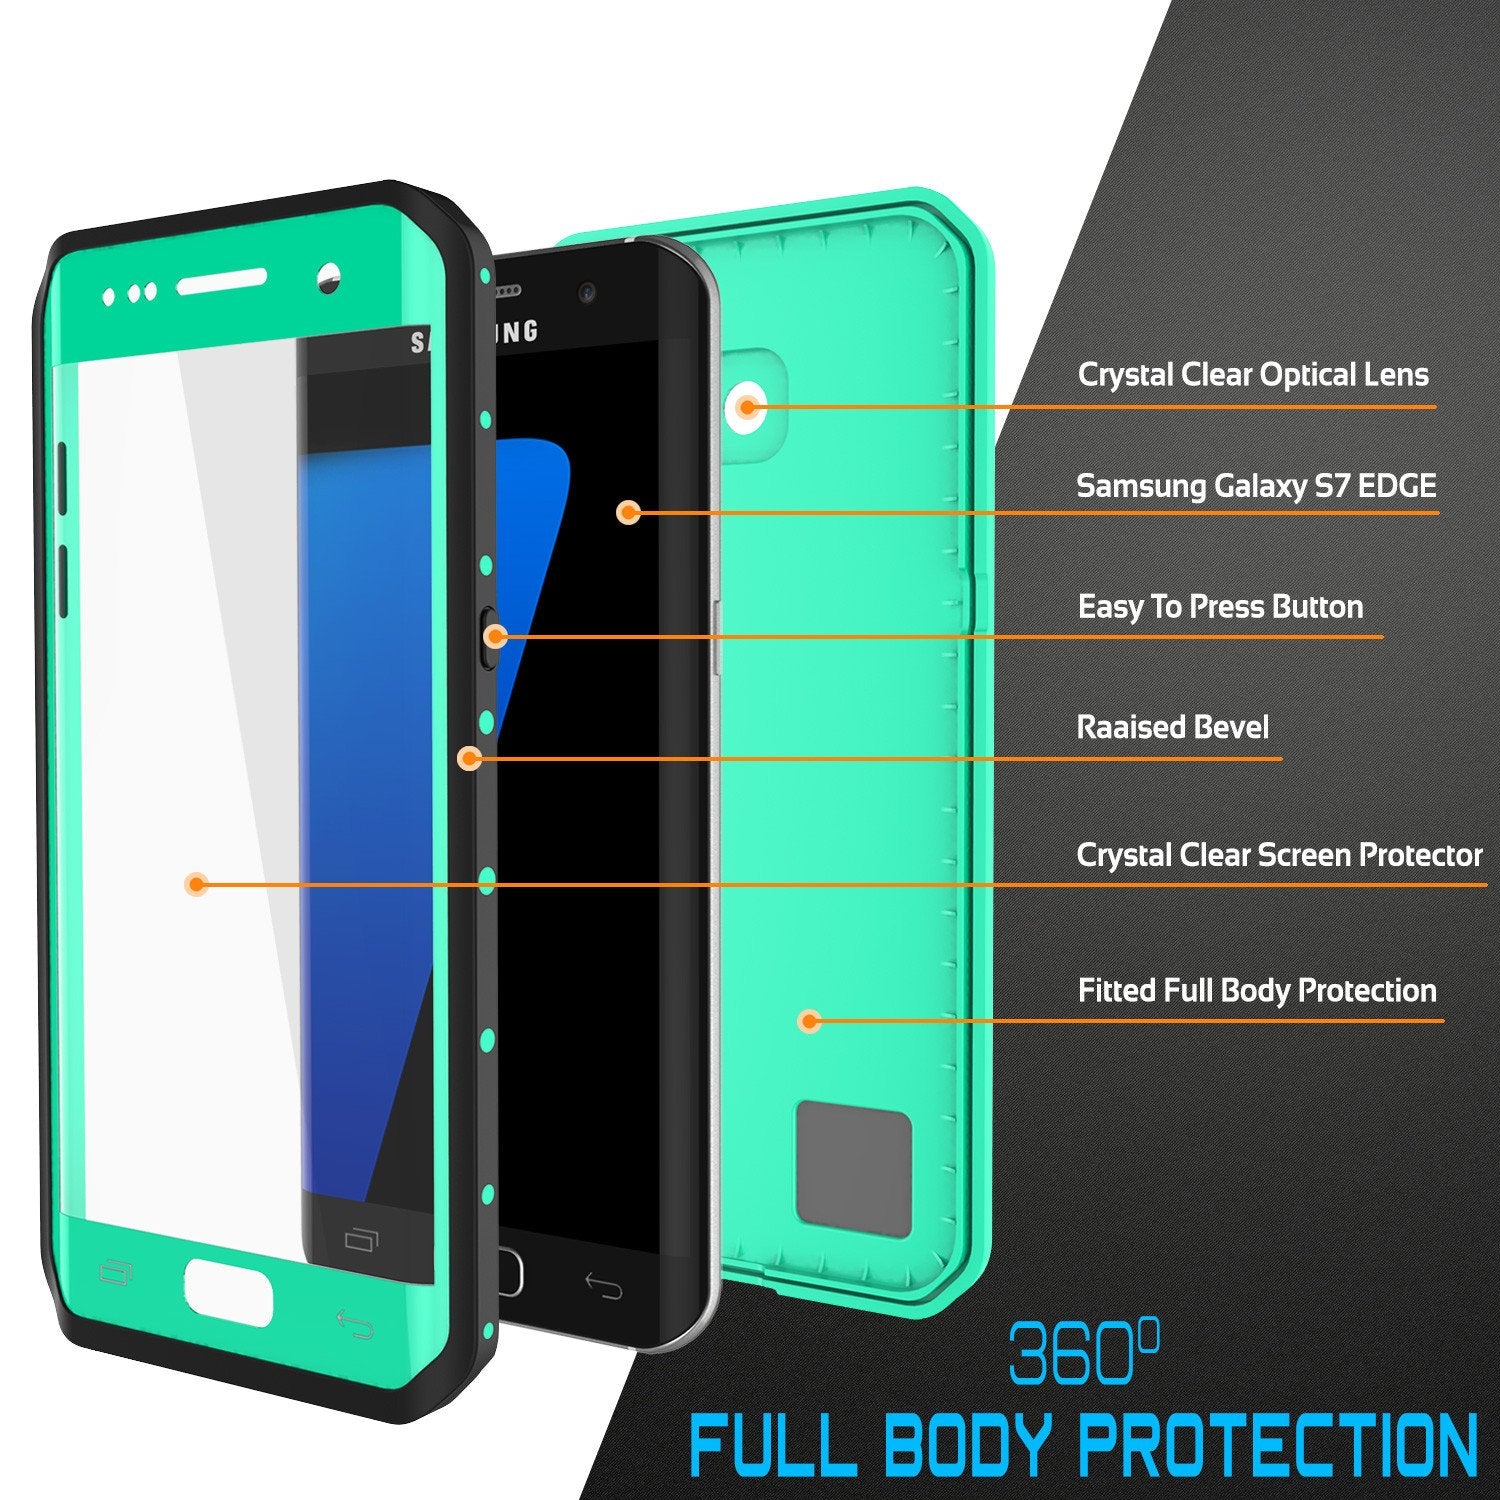 Galaxy S7 EDGE Waterproof Case PunkCase StudStar Teal Thin 6.6ft Underwater IP68 Shock/Snow Proof